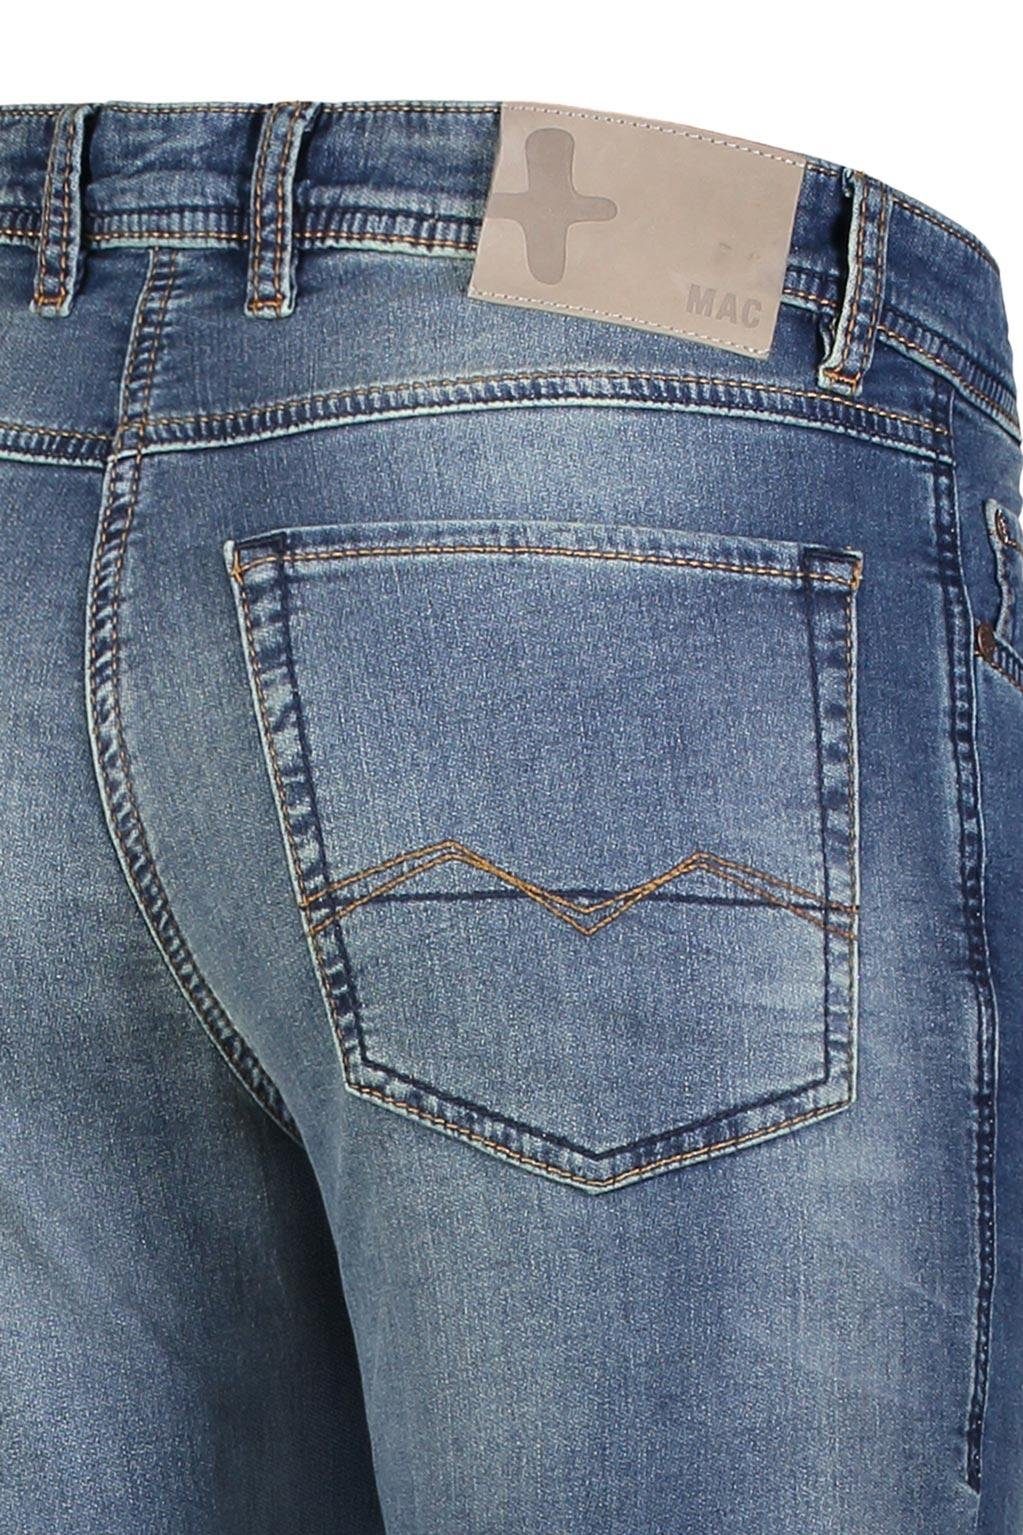 JEANS authentic JOG'N MAC wash 5-Pocket-Jeans blue MAC 0590-00-0994L-H786 grey